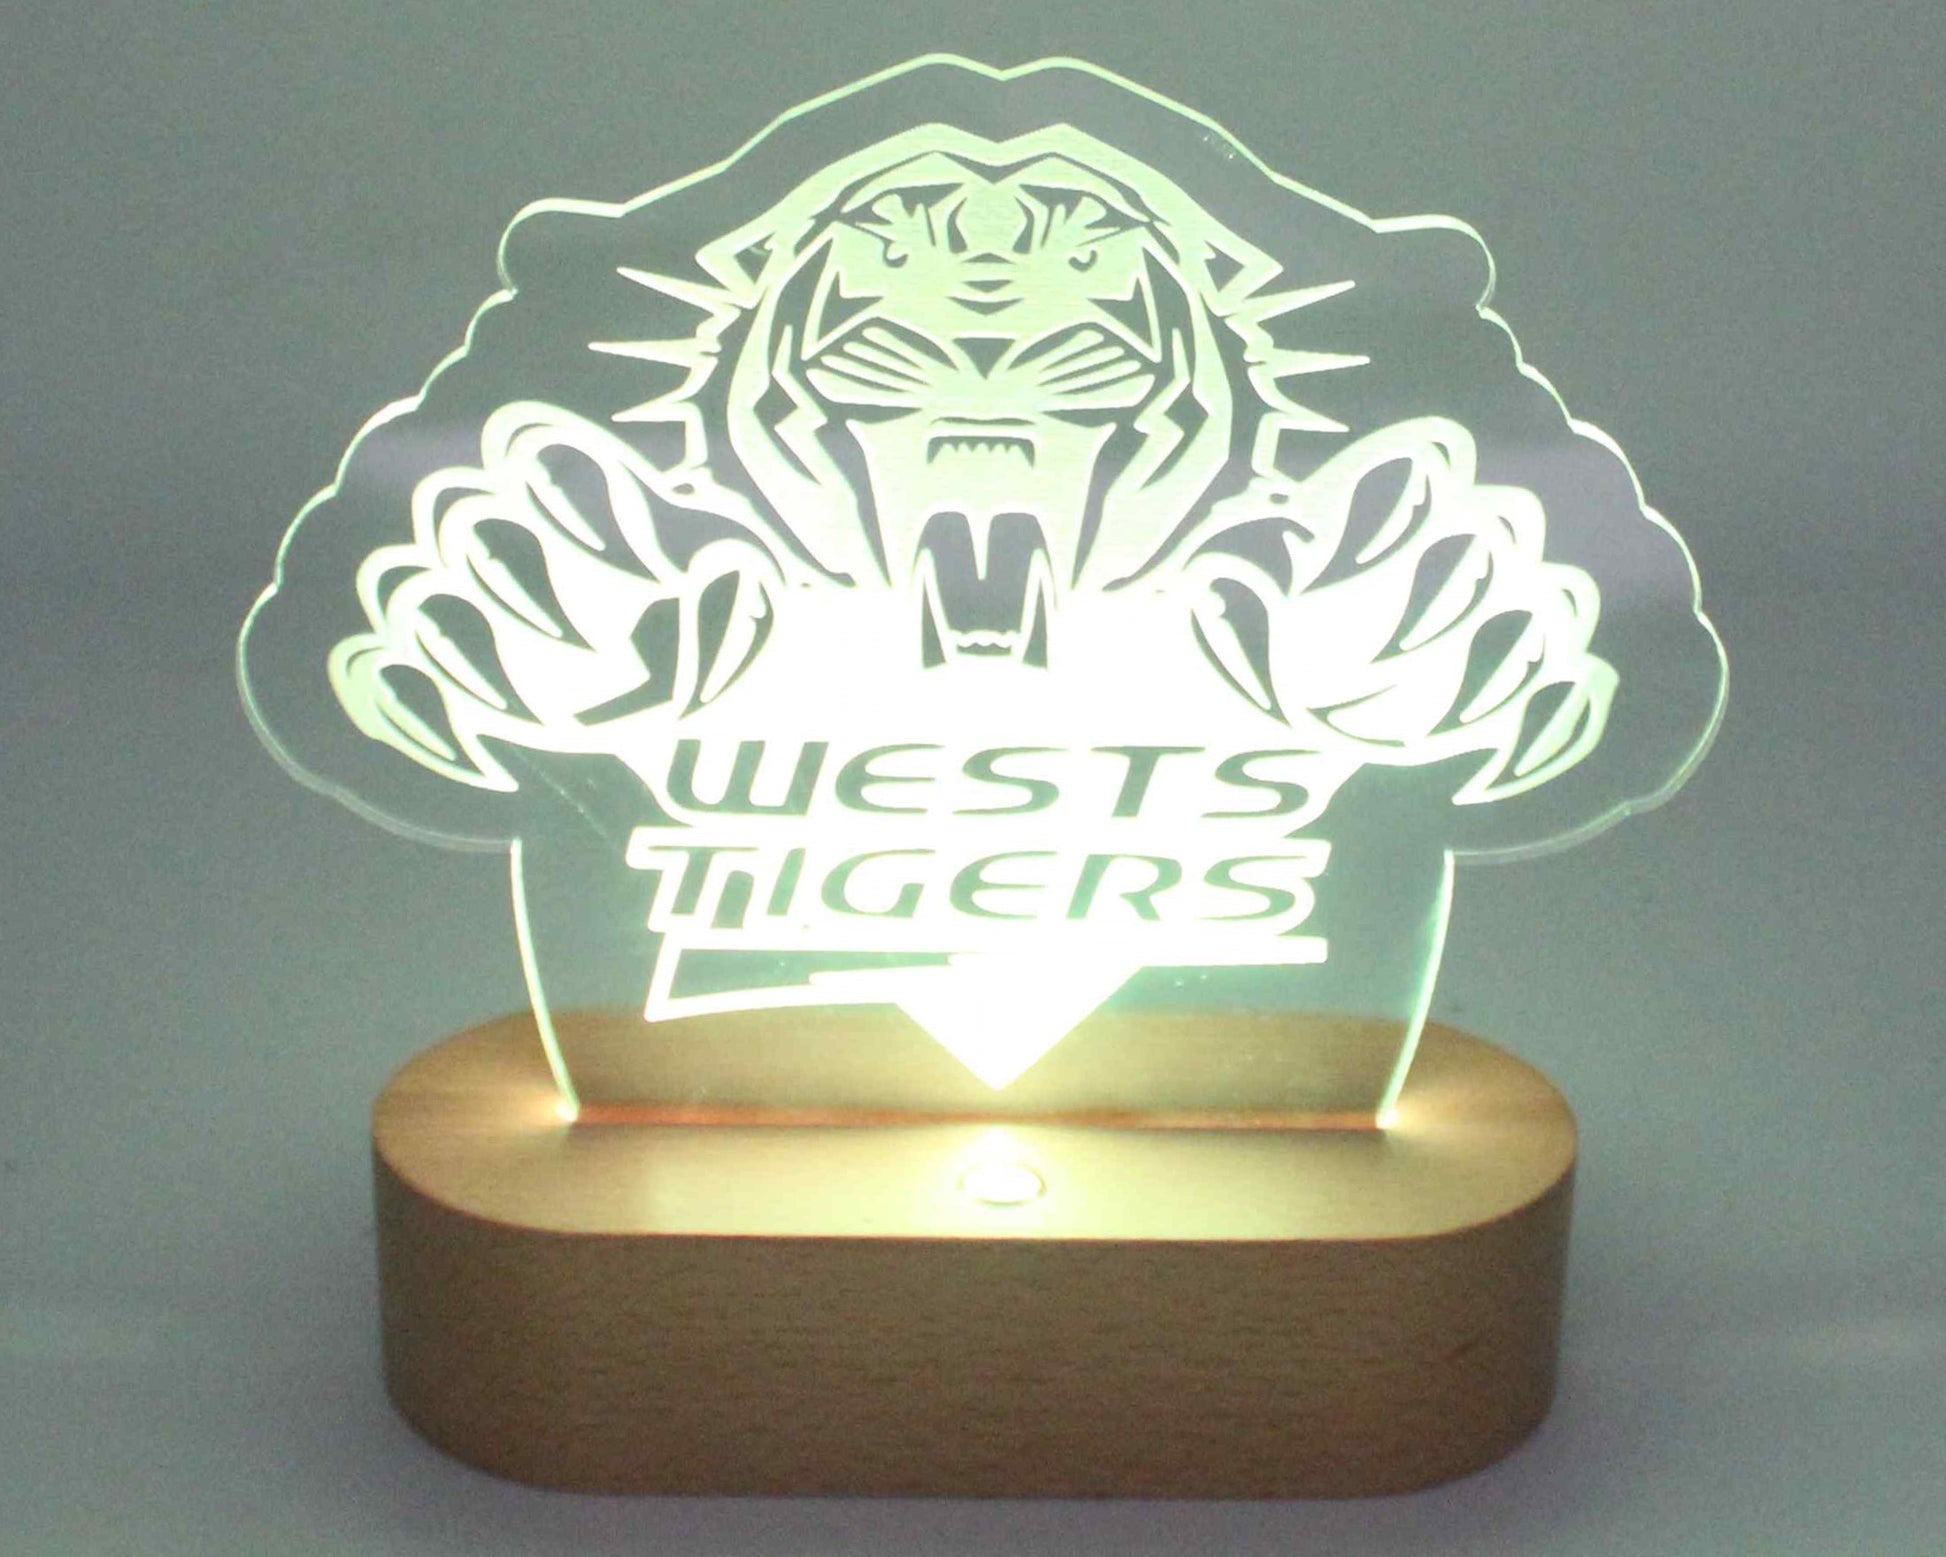 NRL Display Night Light Wests Tigers - Haisley Design